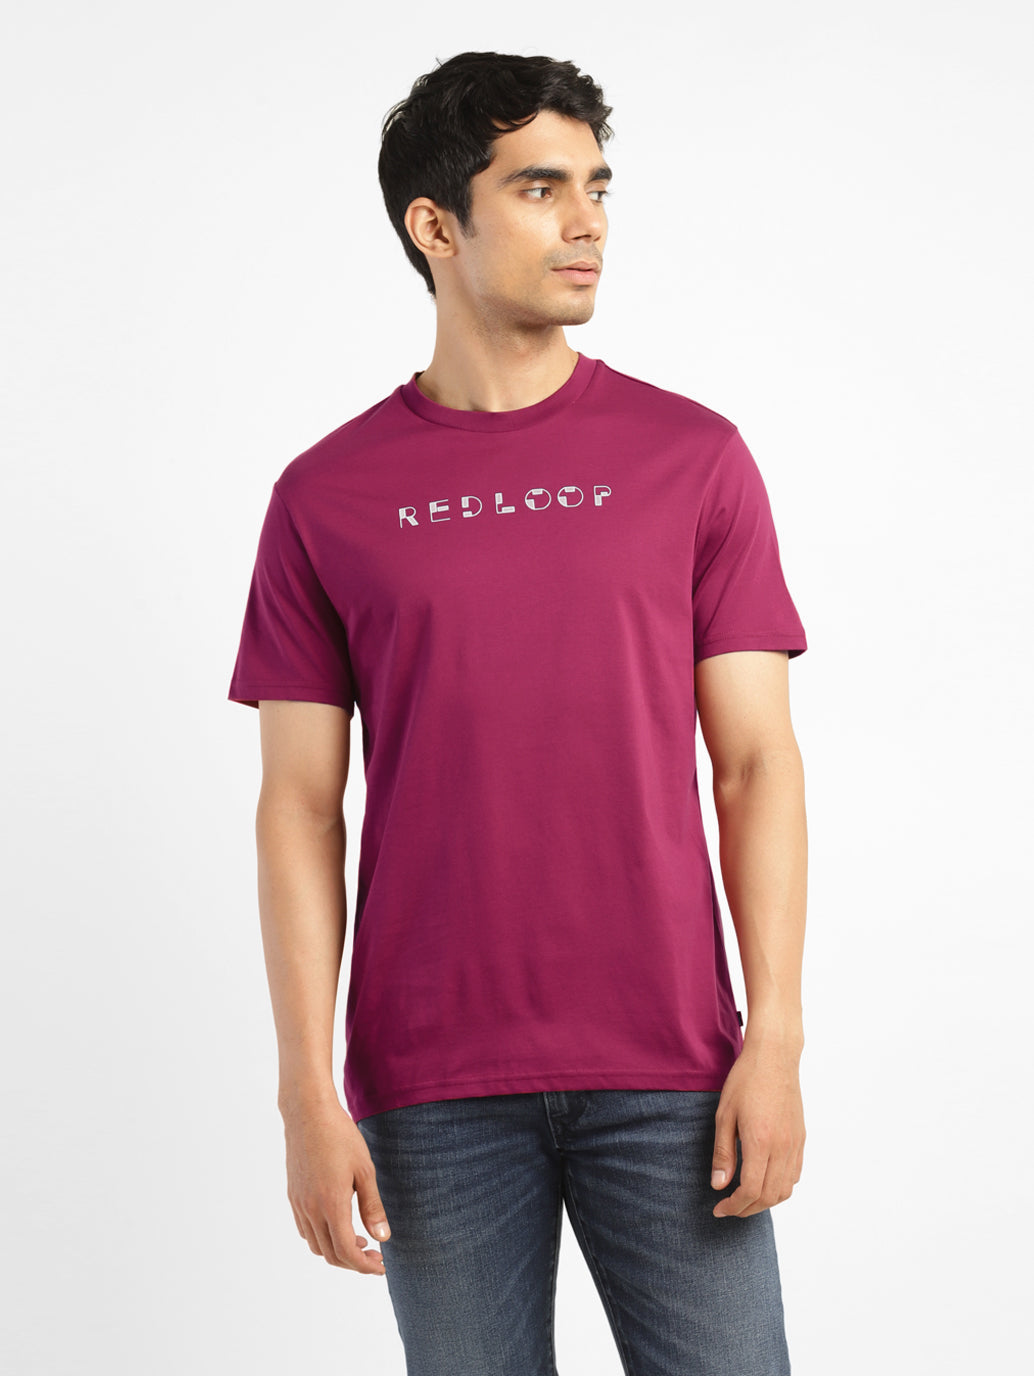 Men's Graphic Round Neck T-shirt